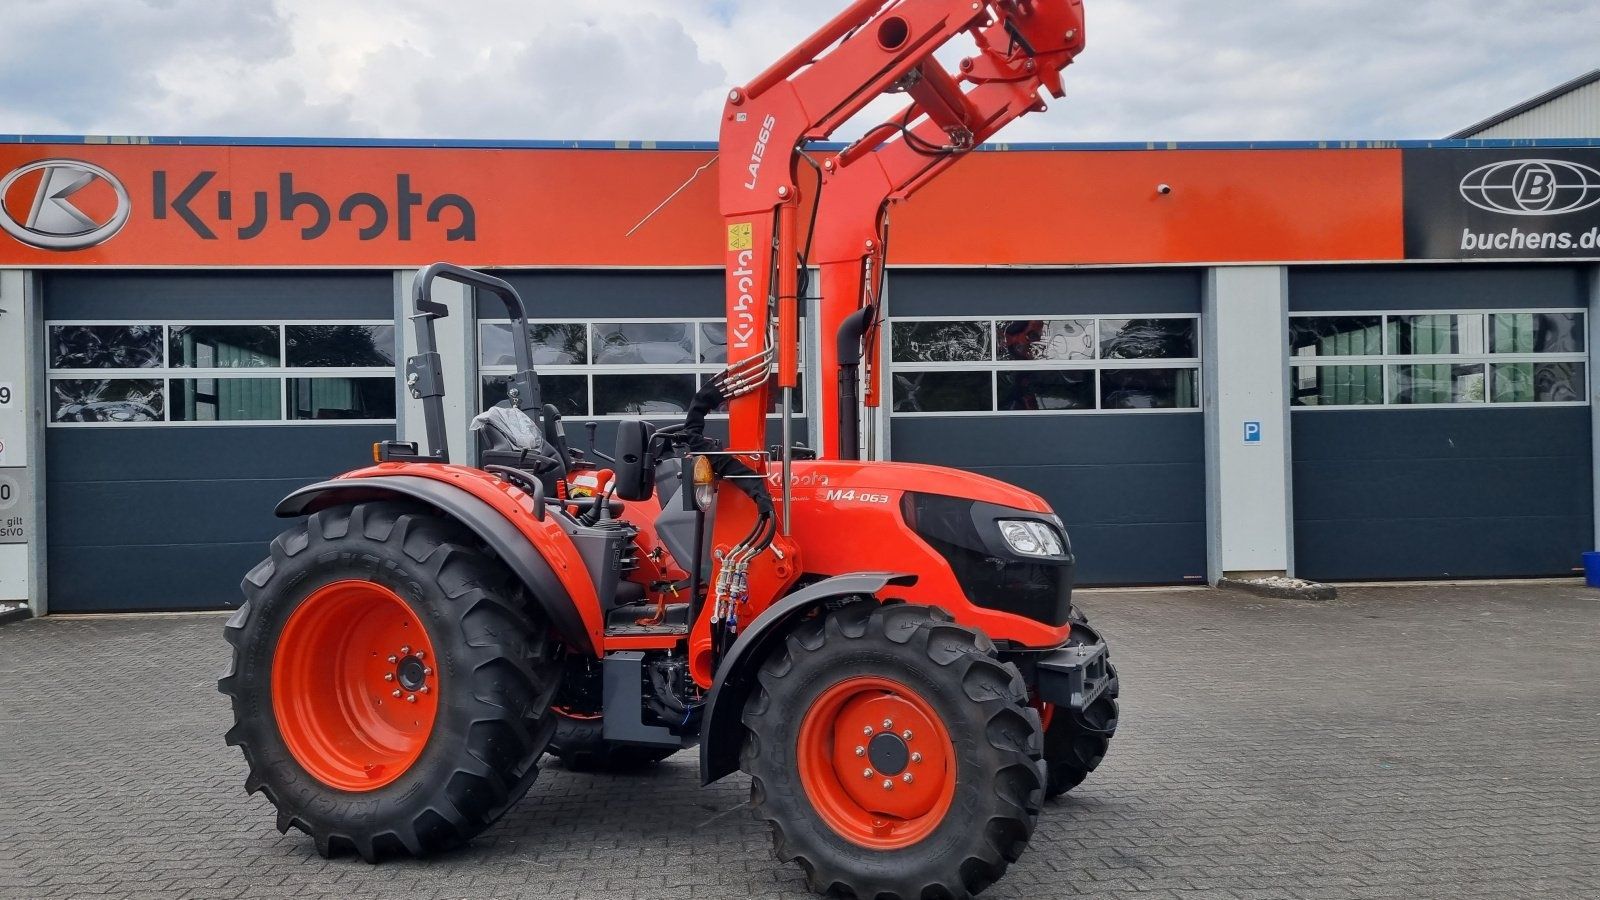 Used Kubota tractors | E-FARM